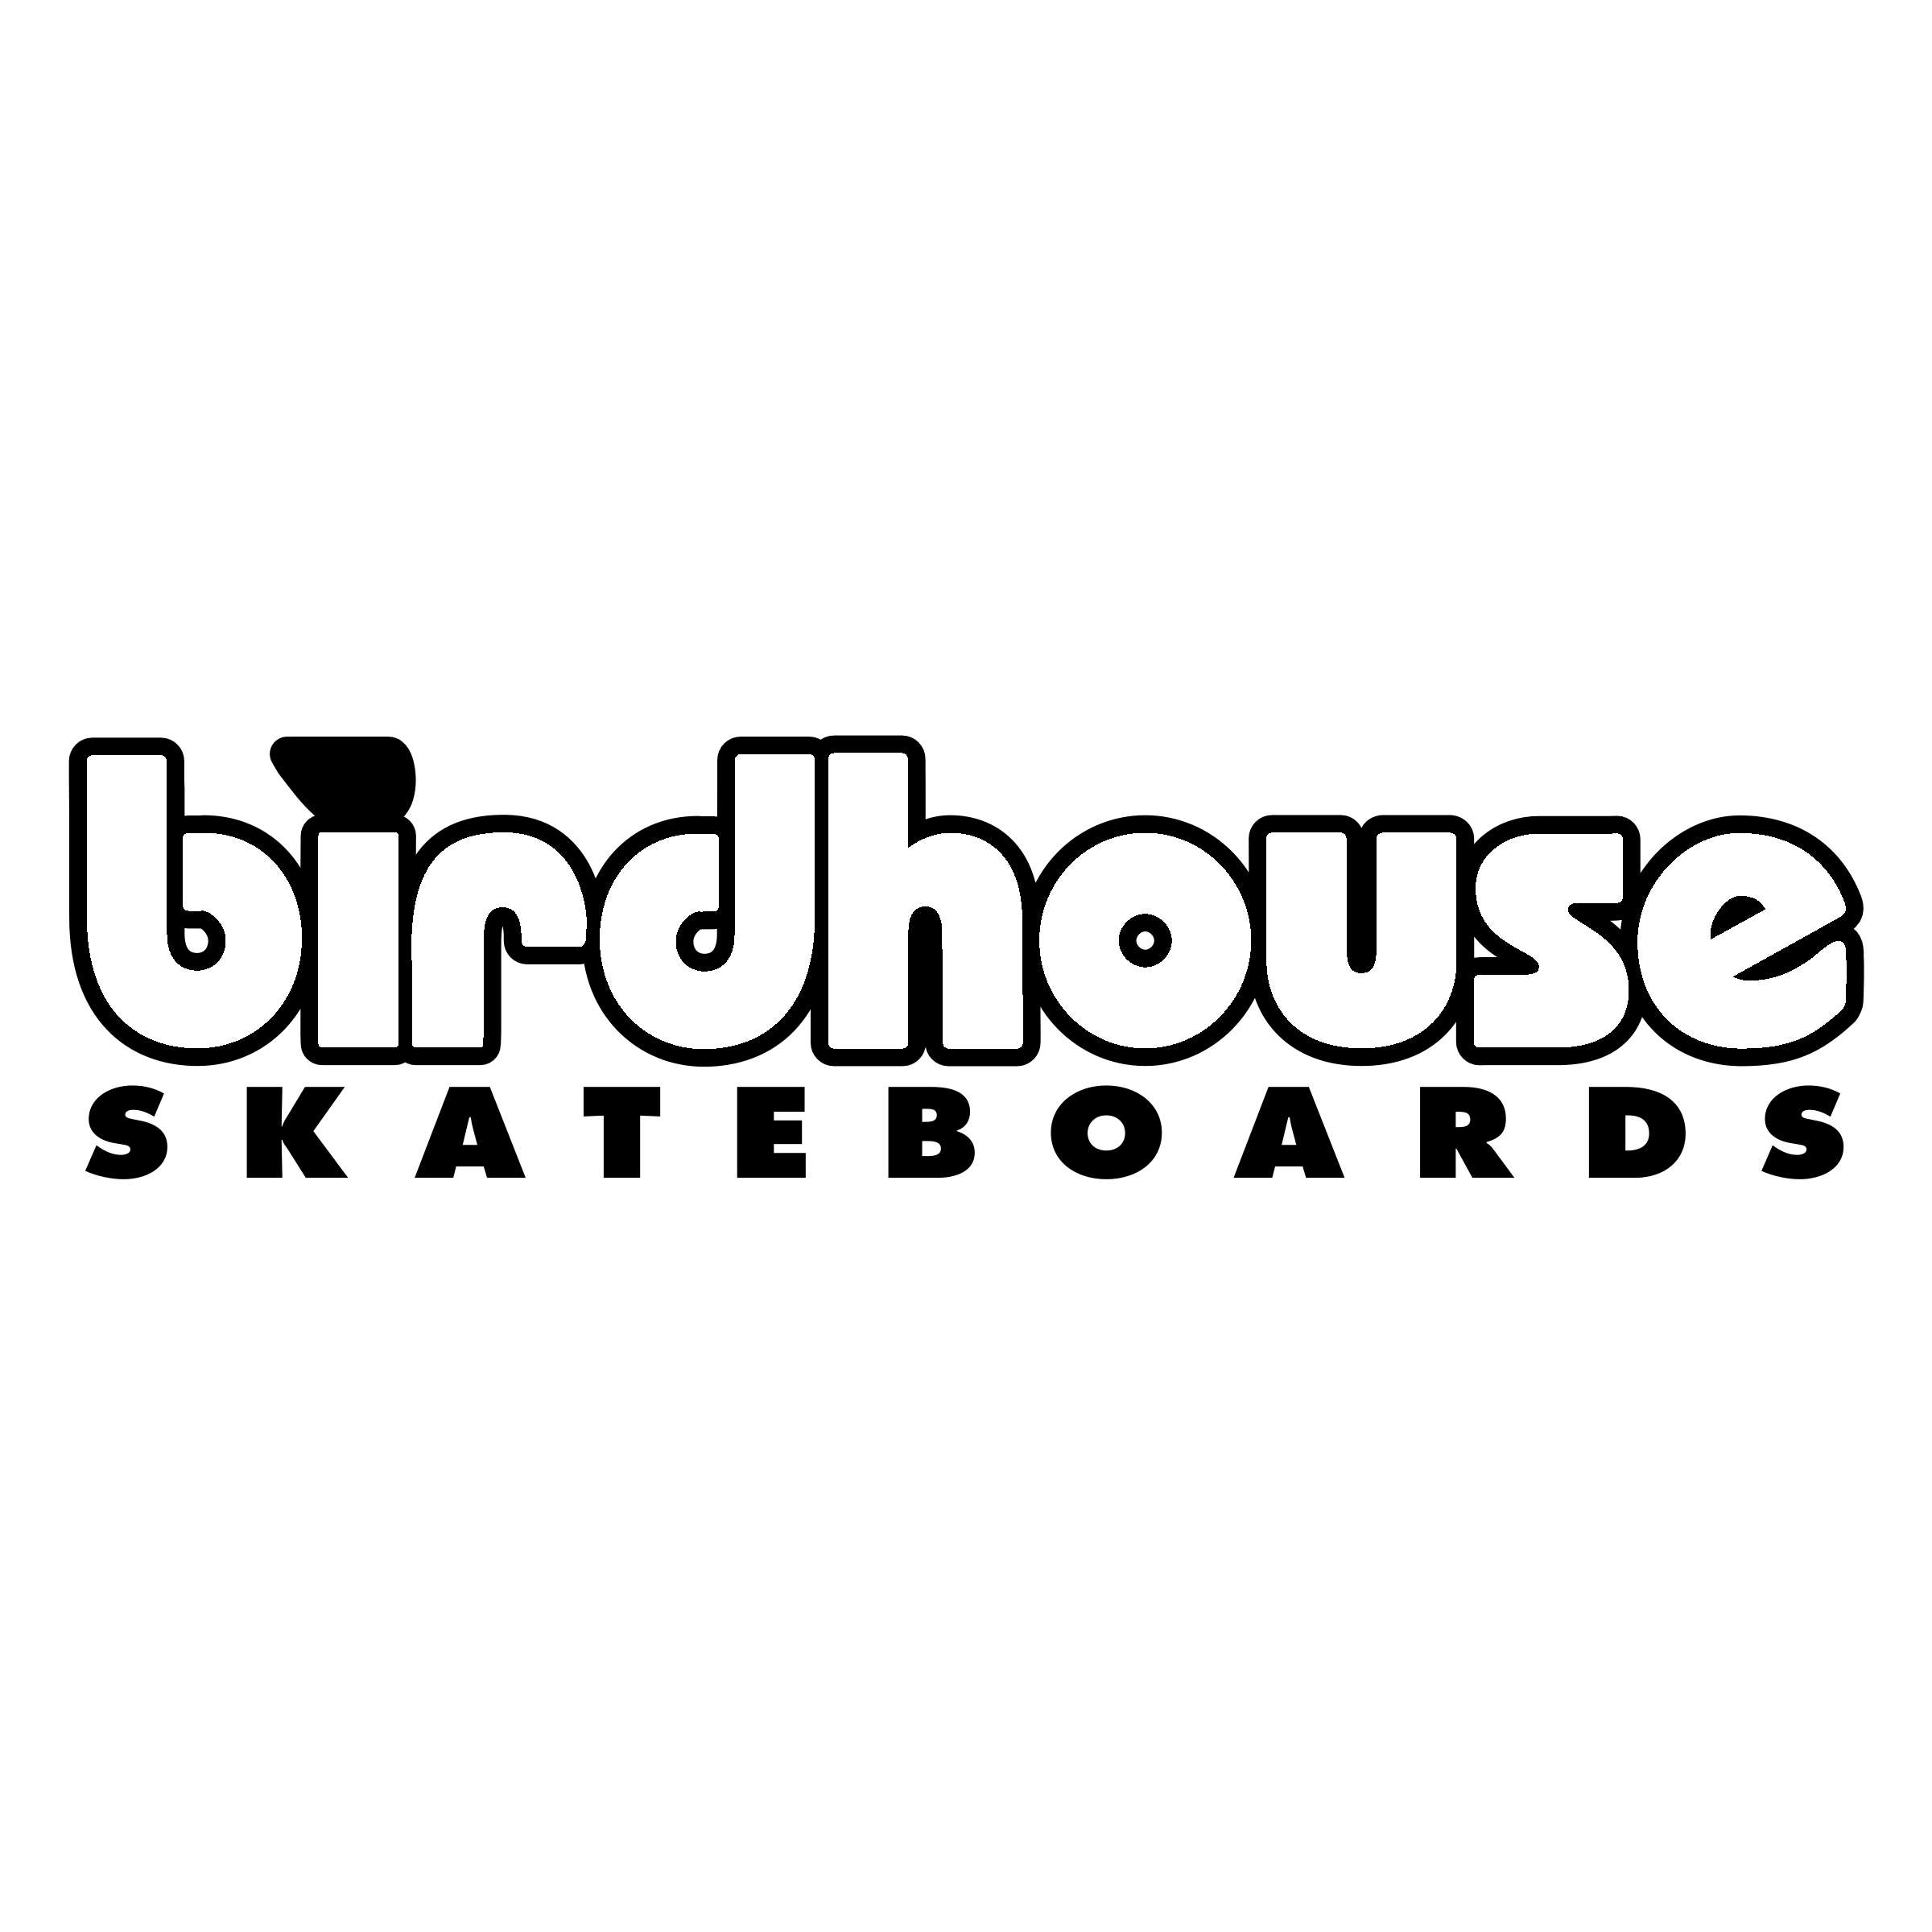 Birdhouse Skateboards Logo - Birdhouse Skateboards Logo PNG Transparent & SVG Vector - Freebie Supply